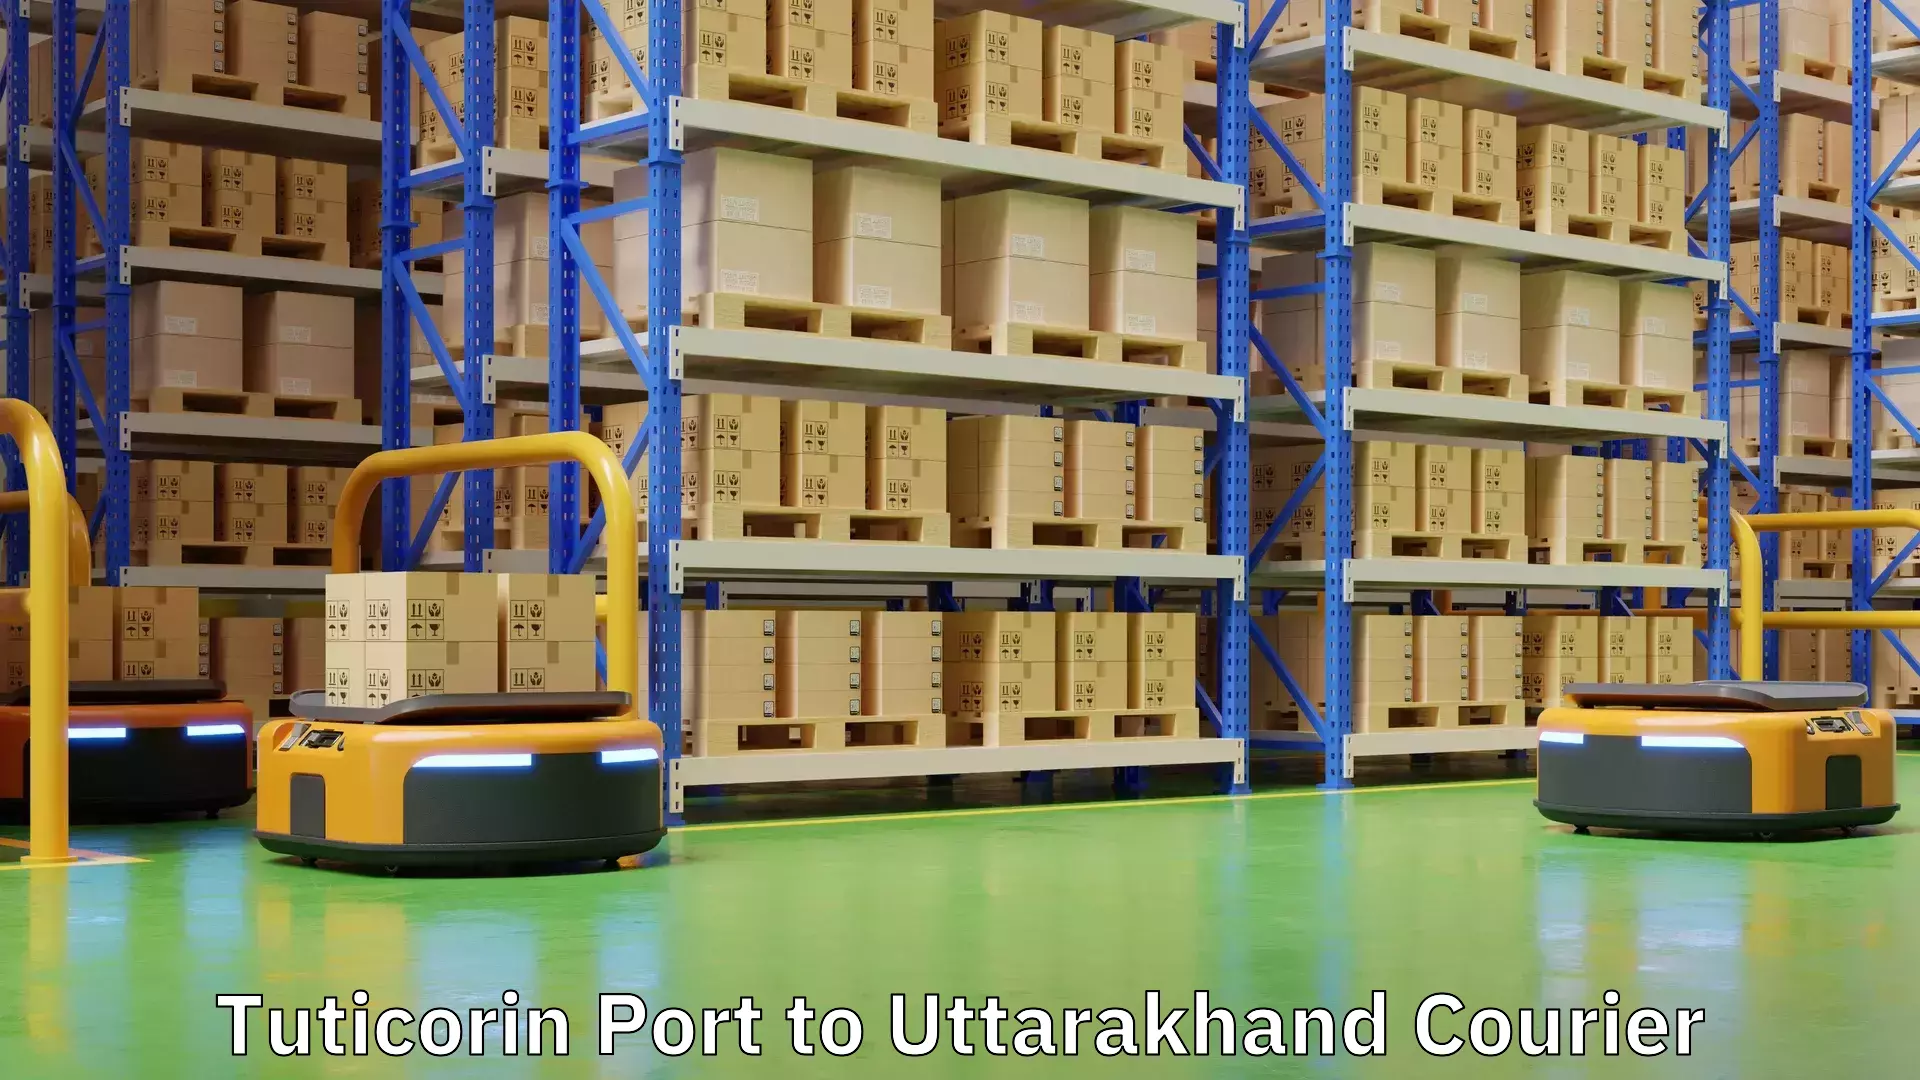 Express mail solutions Tuticorin Port to Uttarakhand